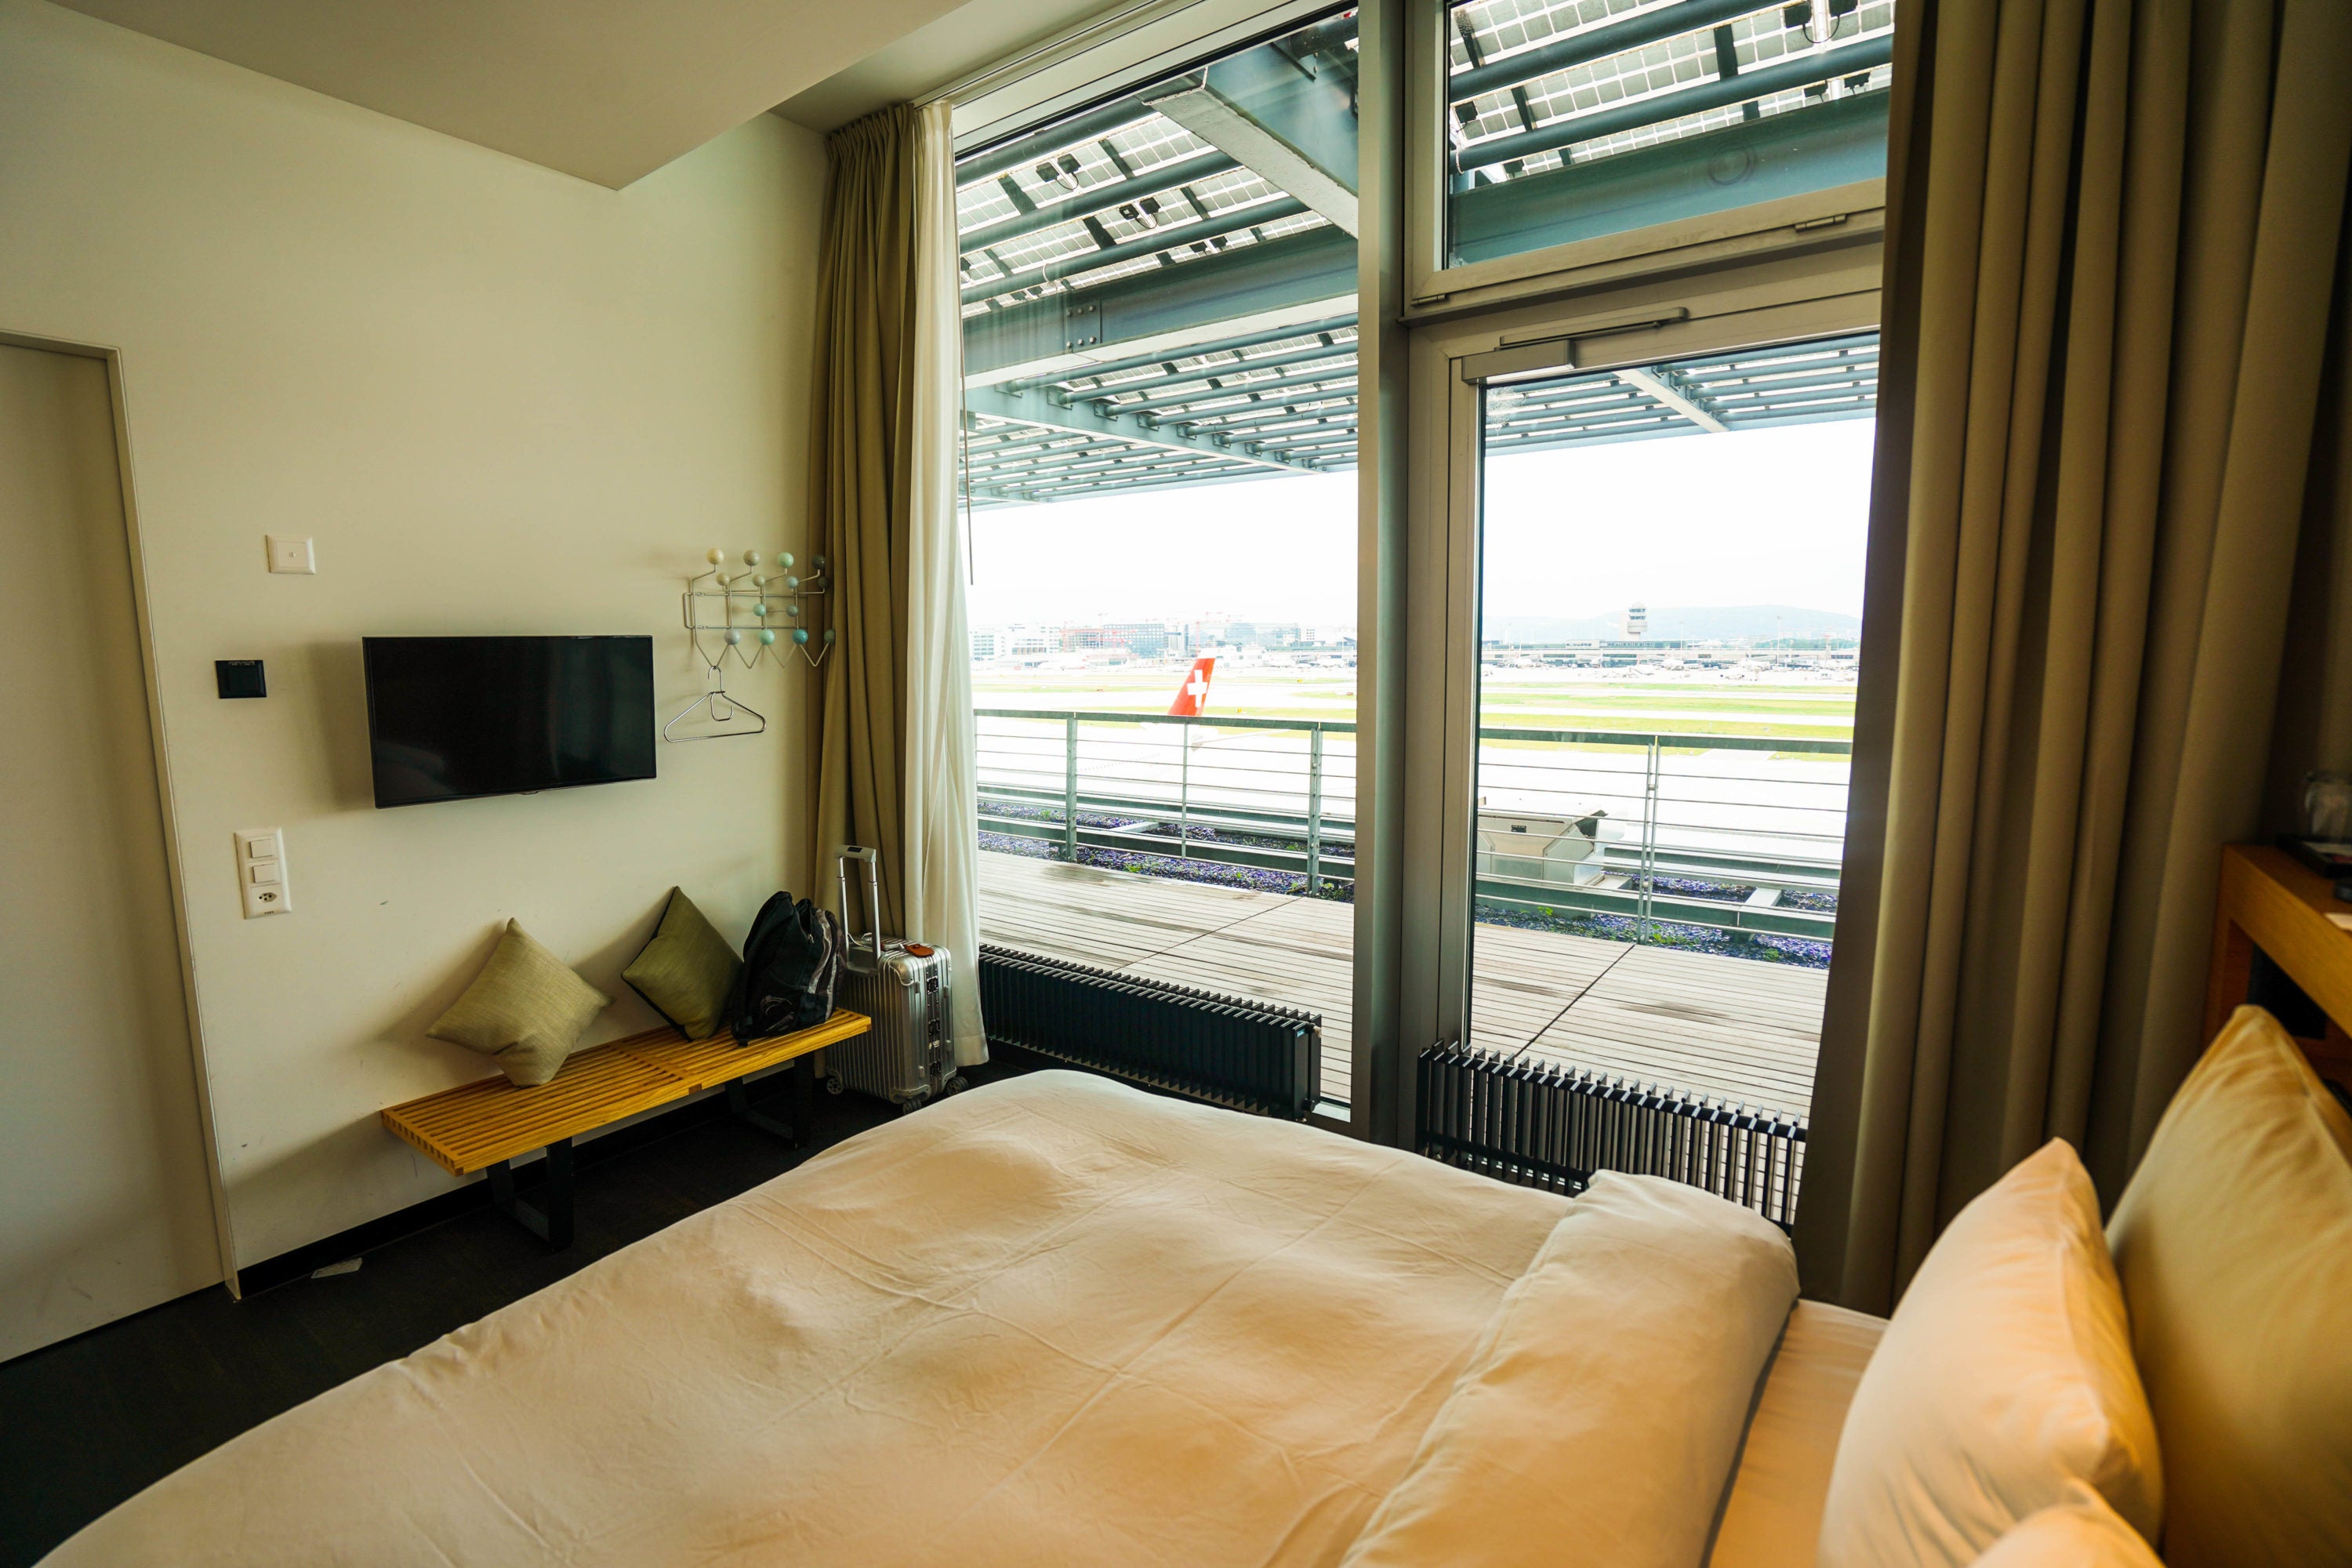 First Class SWISS Amsterdam > Bangkok desde 2,763€ - Viajar barato: Chollos de viajes - Foro General de Viajes